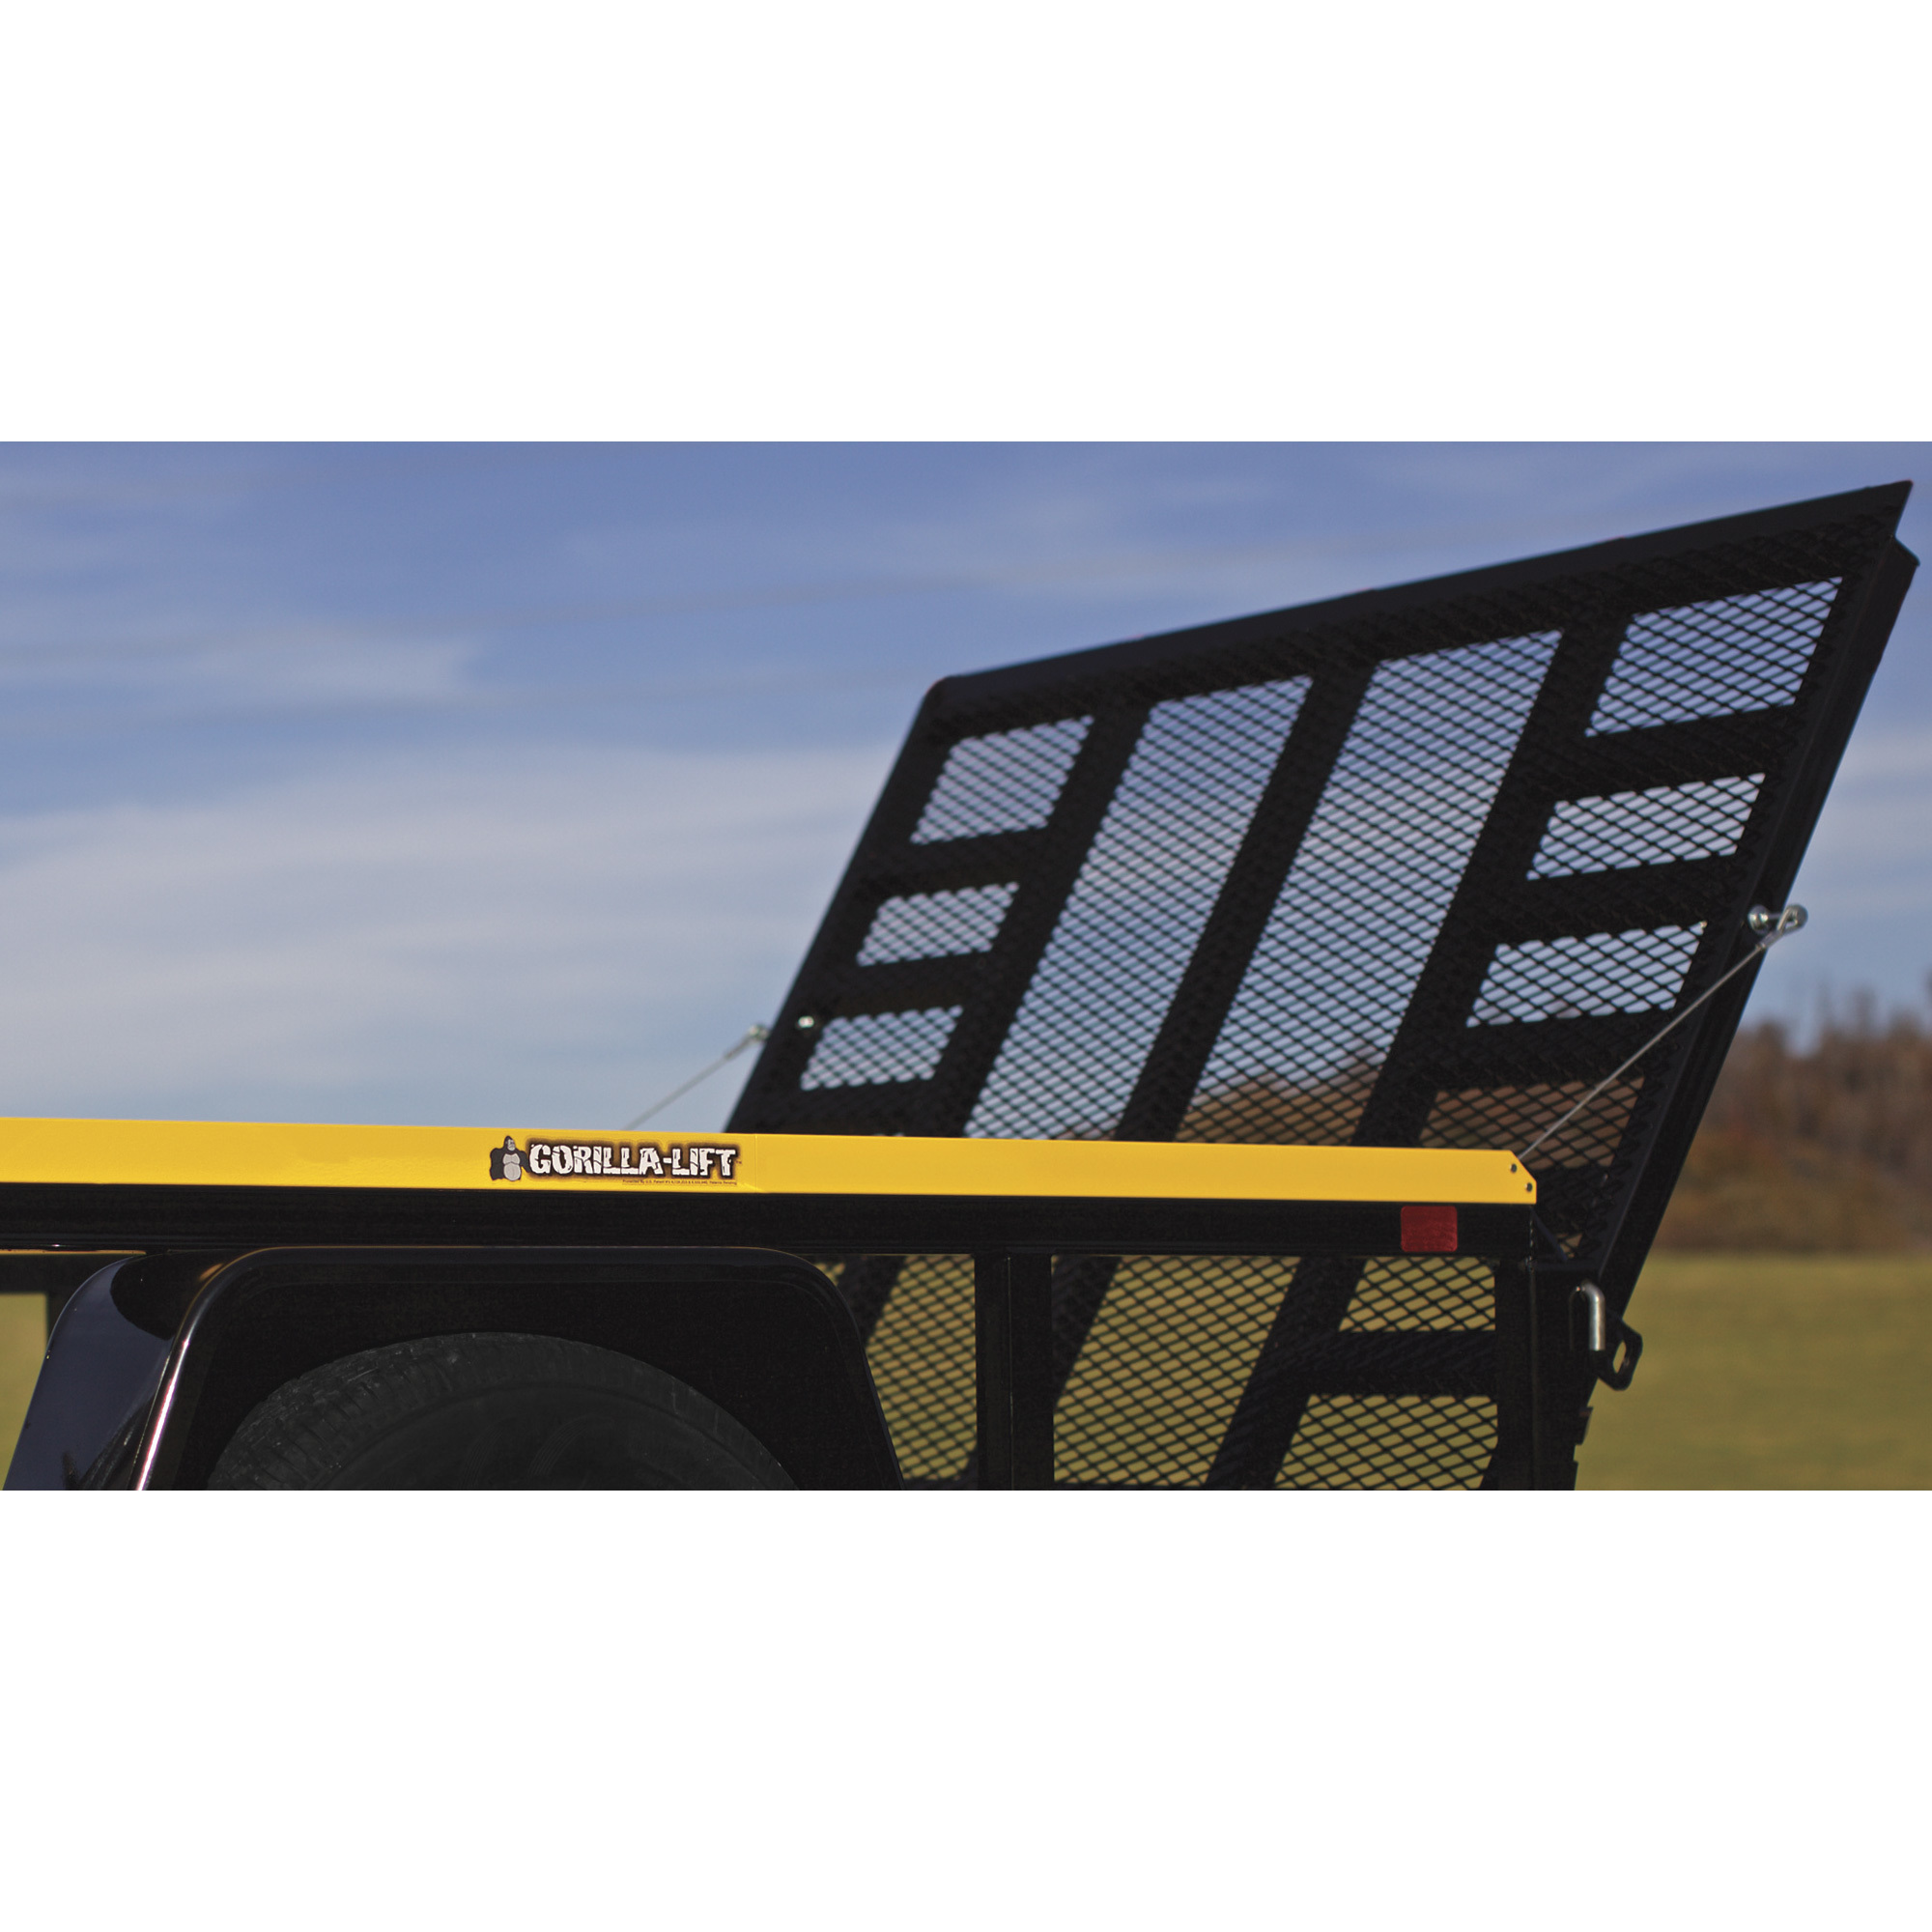 Gorilla-Lift 2-Sided Trailer Tailgate Lift Assist  Ramp Lift Assist,  Model# 40101042G/GOR2LIFT Northern Tool